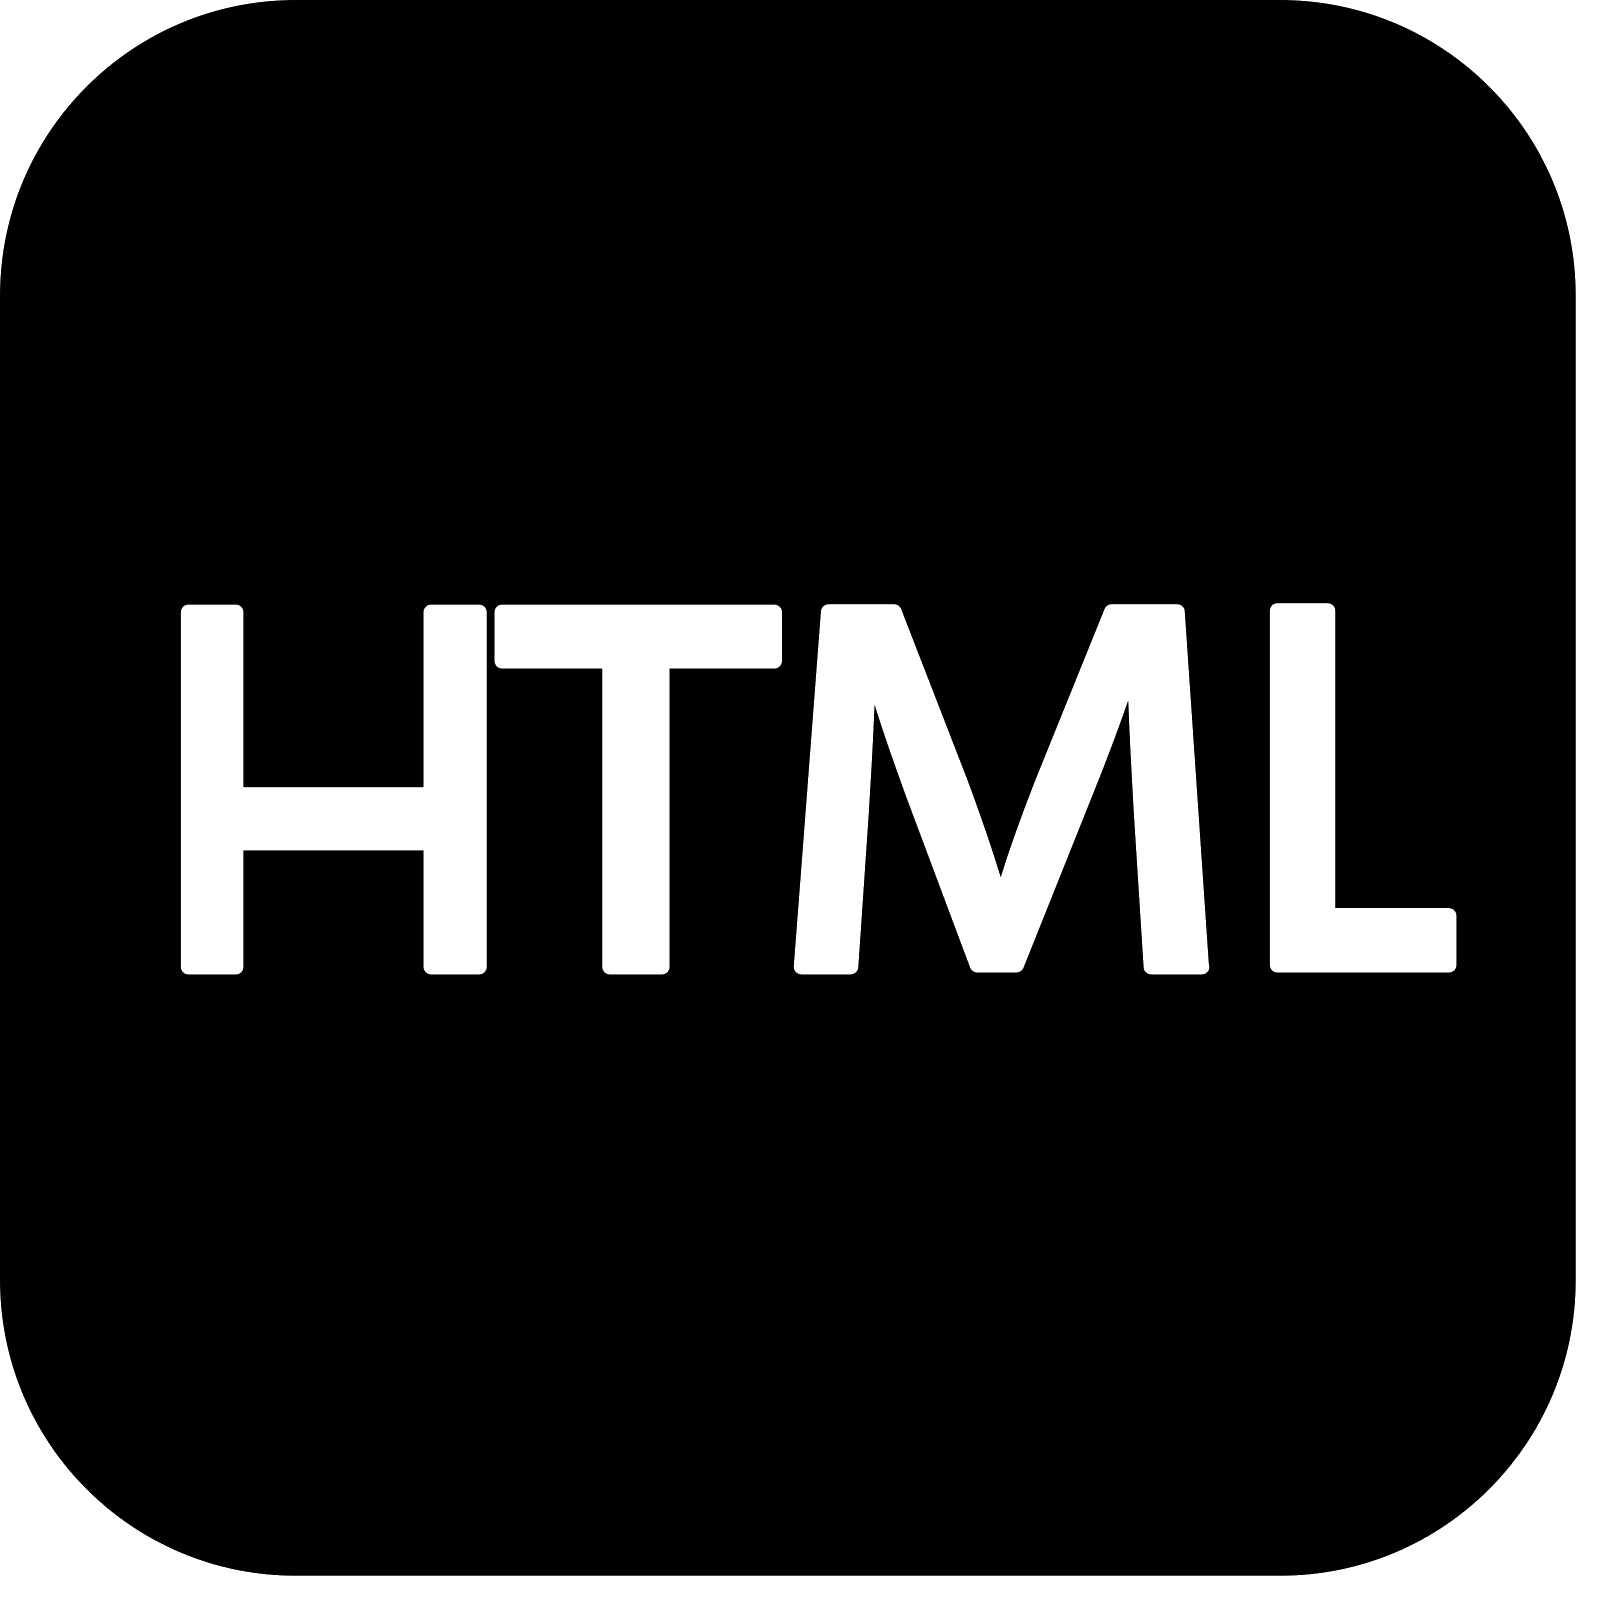 HTML Logo - LogoDix